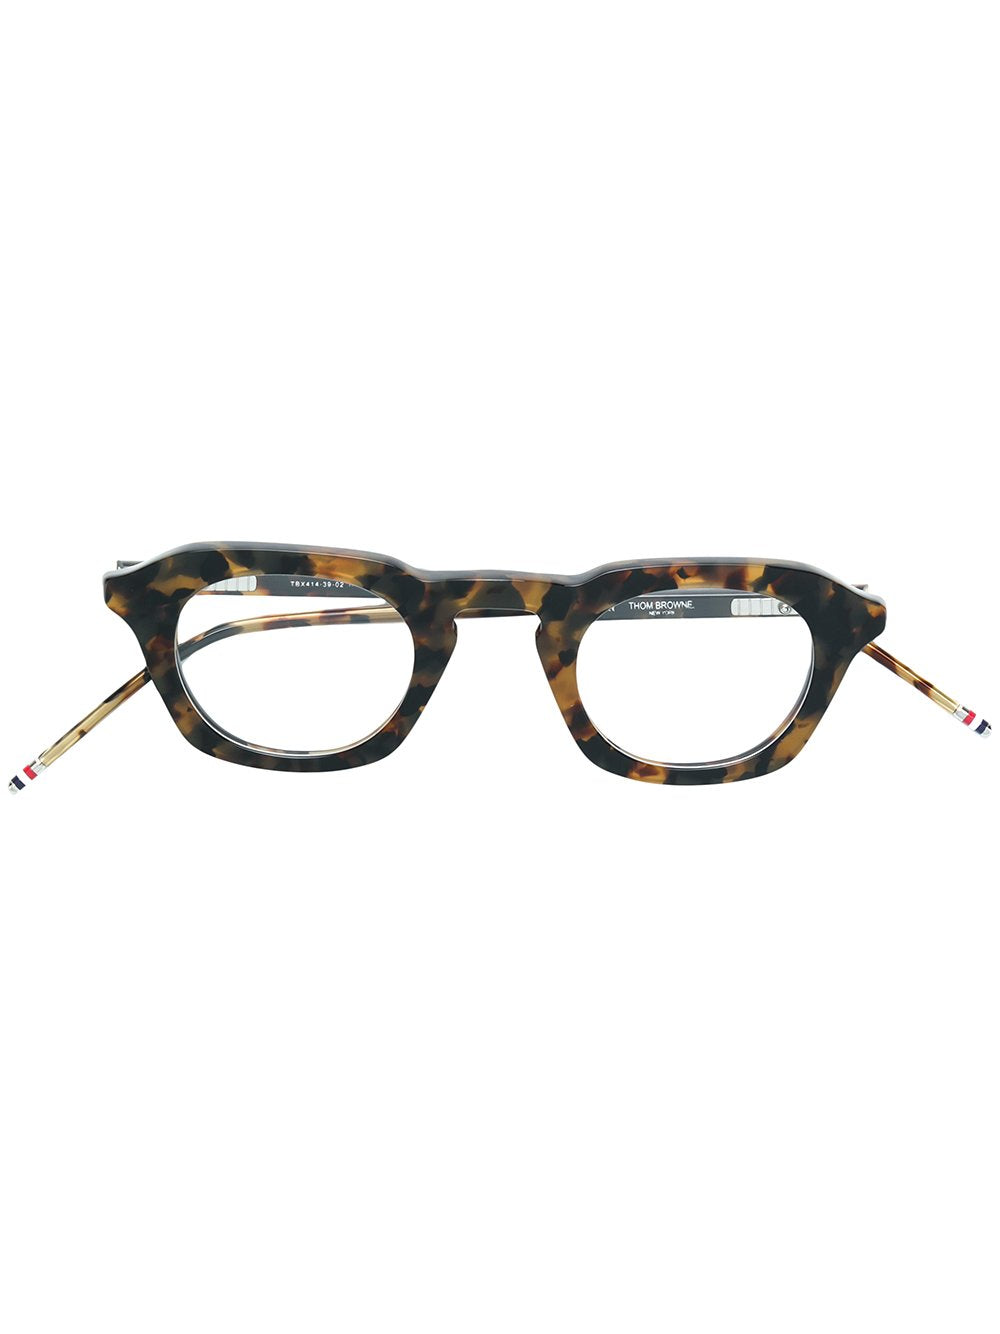 THOM BROWNE UNISEX Acetate Glasses & Frames 